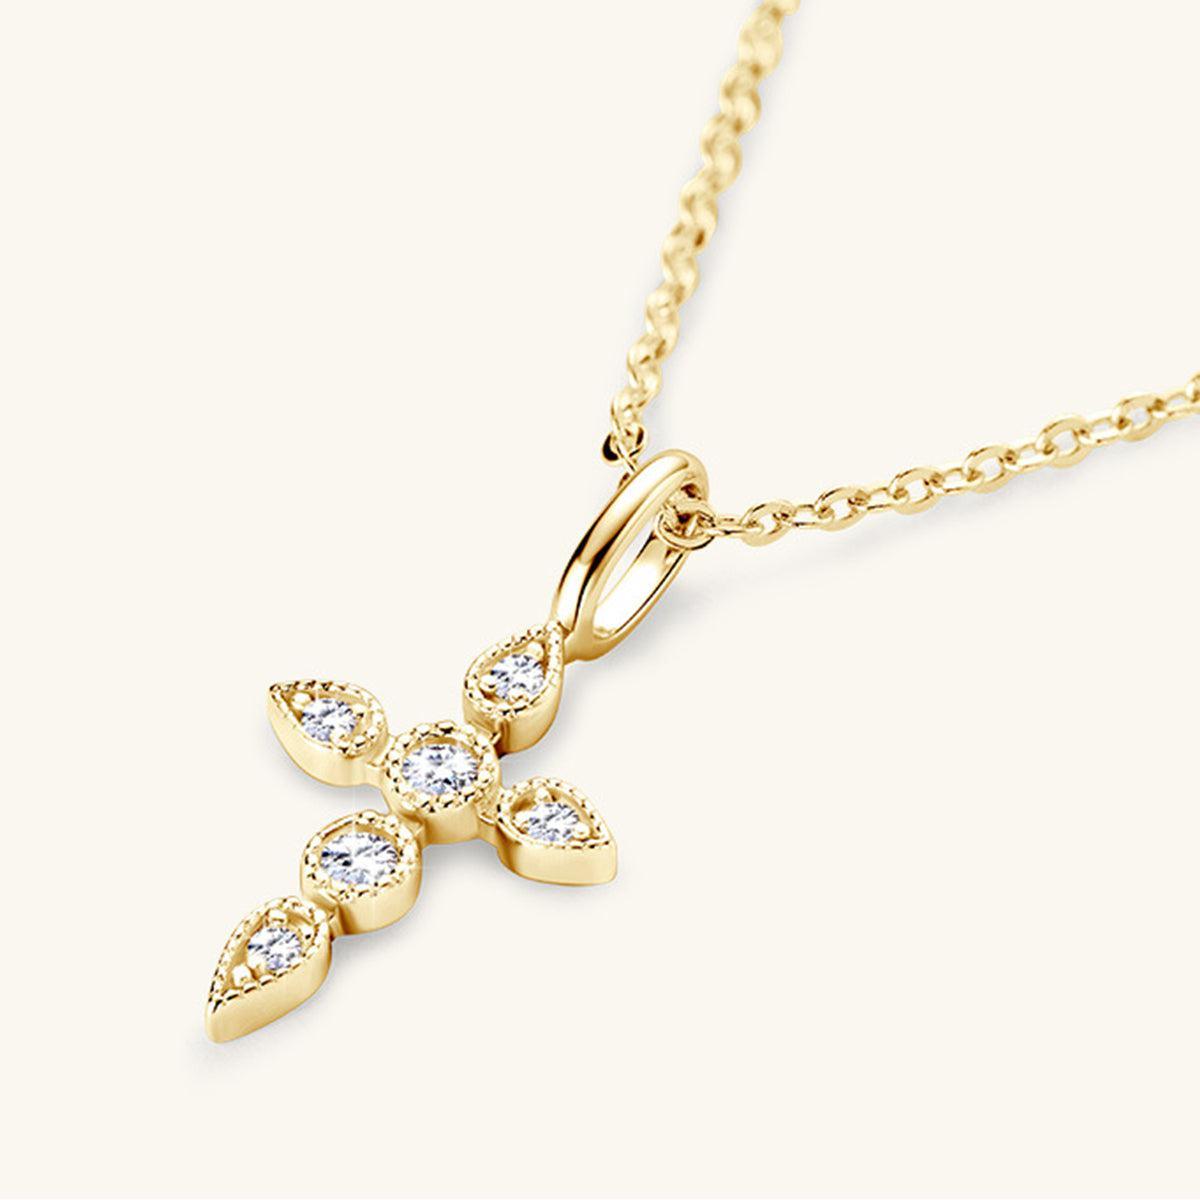 a diamond cross pendant on a gold chain